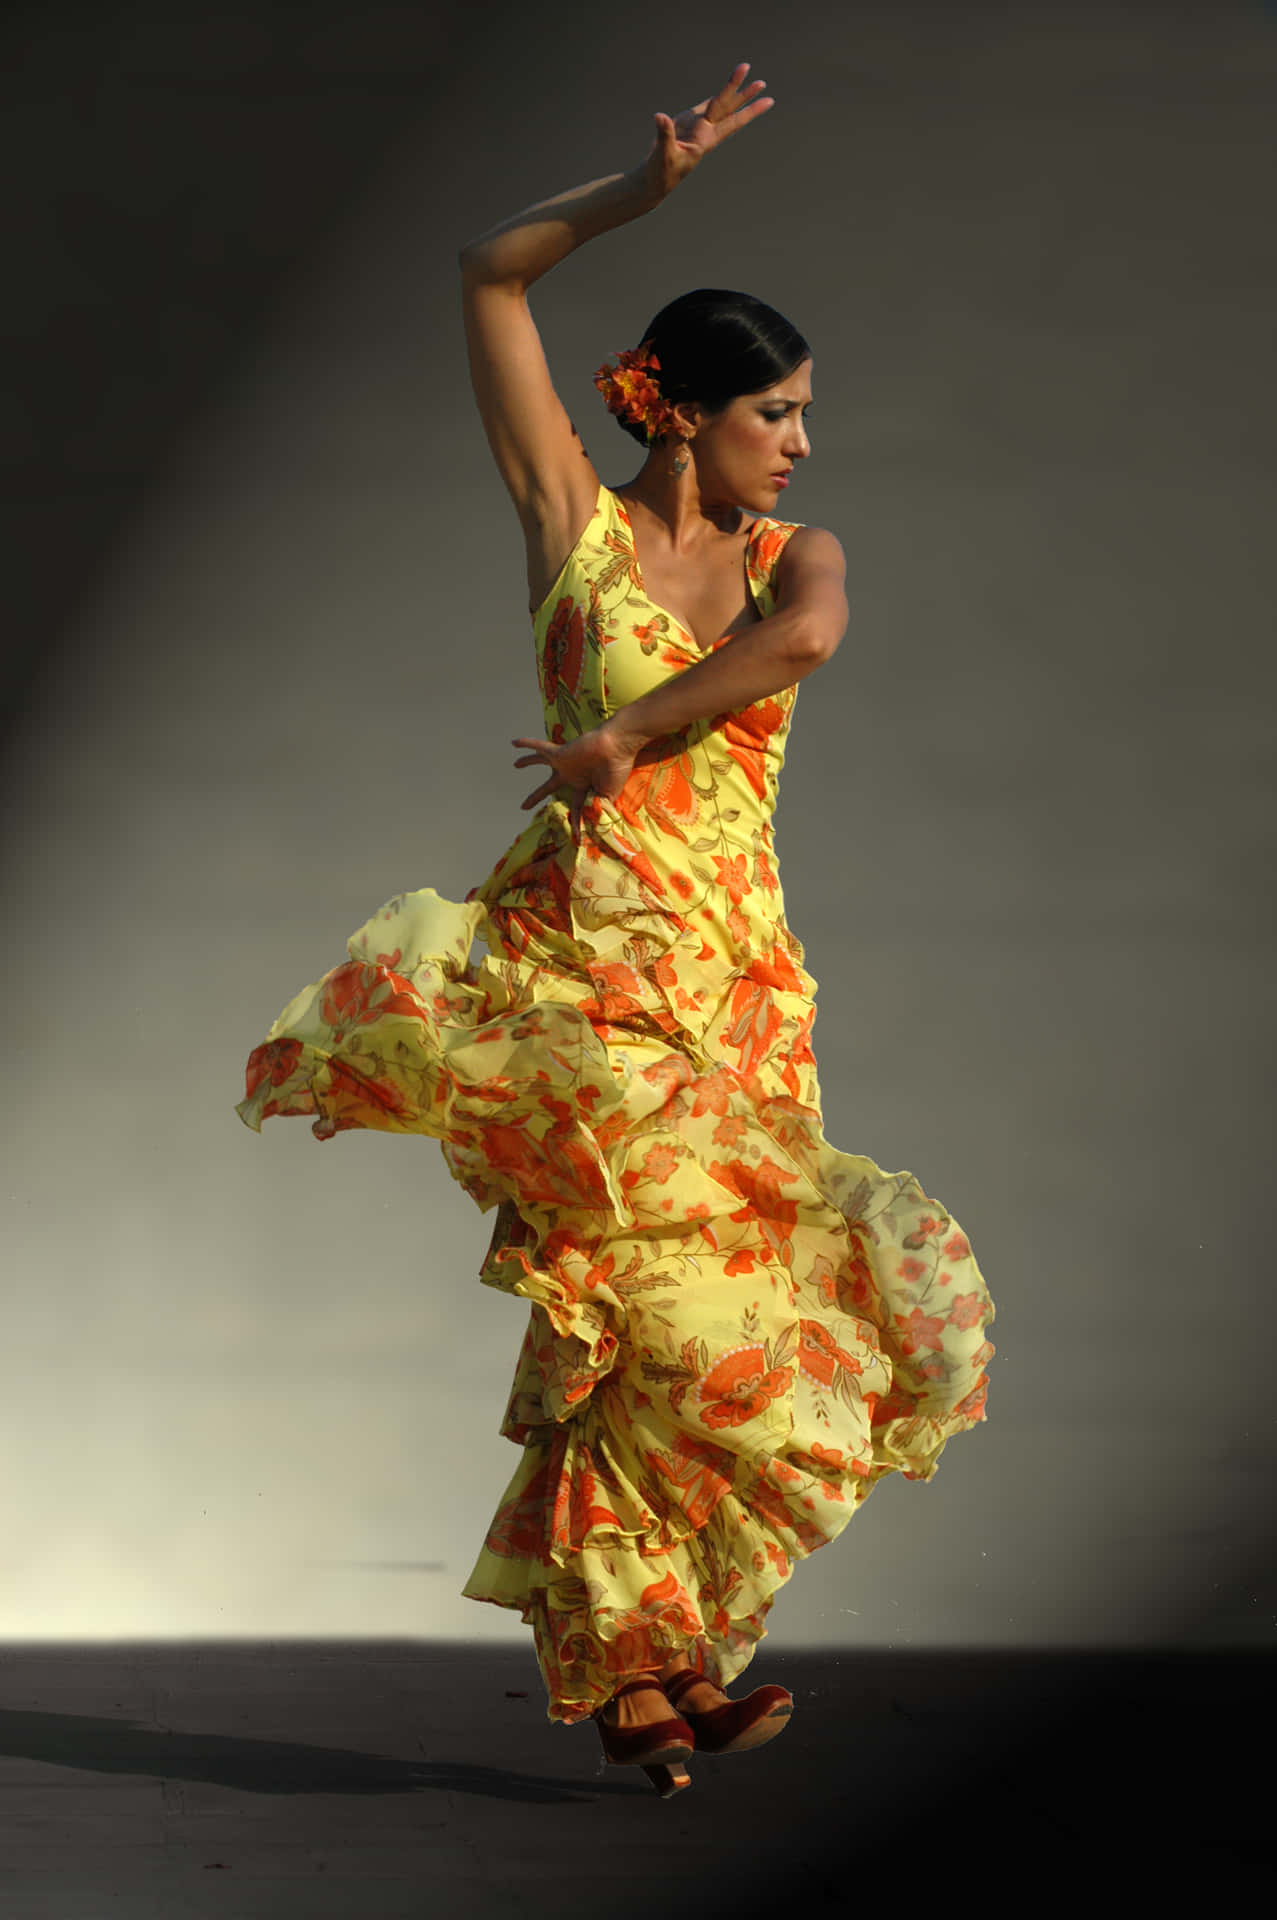 Dancer Dancing Spanish Flamenco Picture